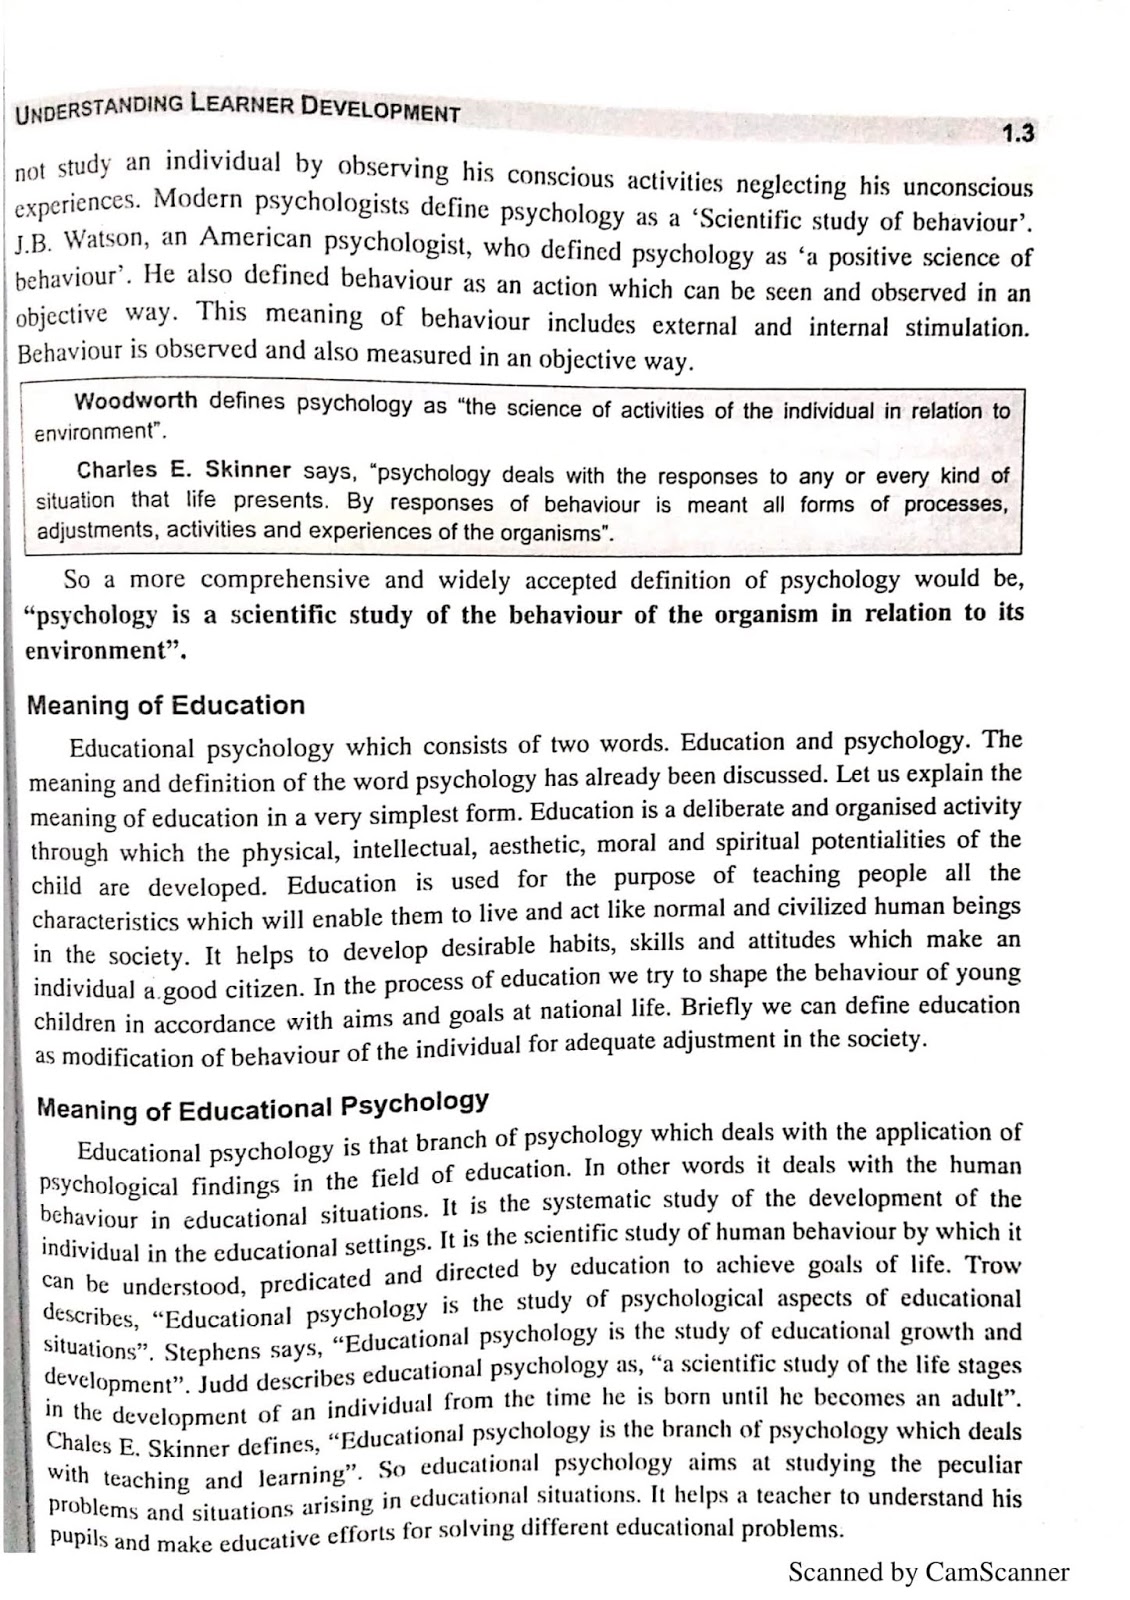 short note on education psychology